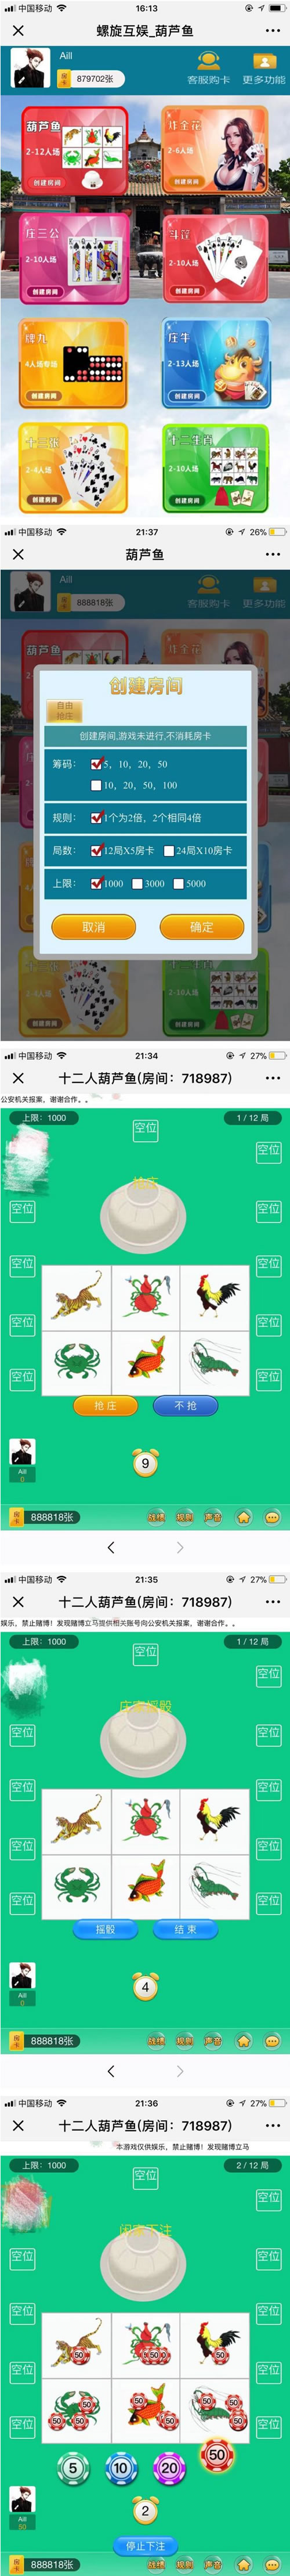 H5微信葫芦鱼娱乐游戏运营版源码插图